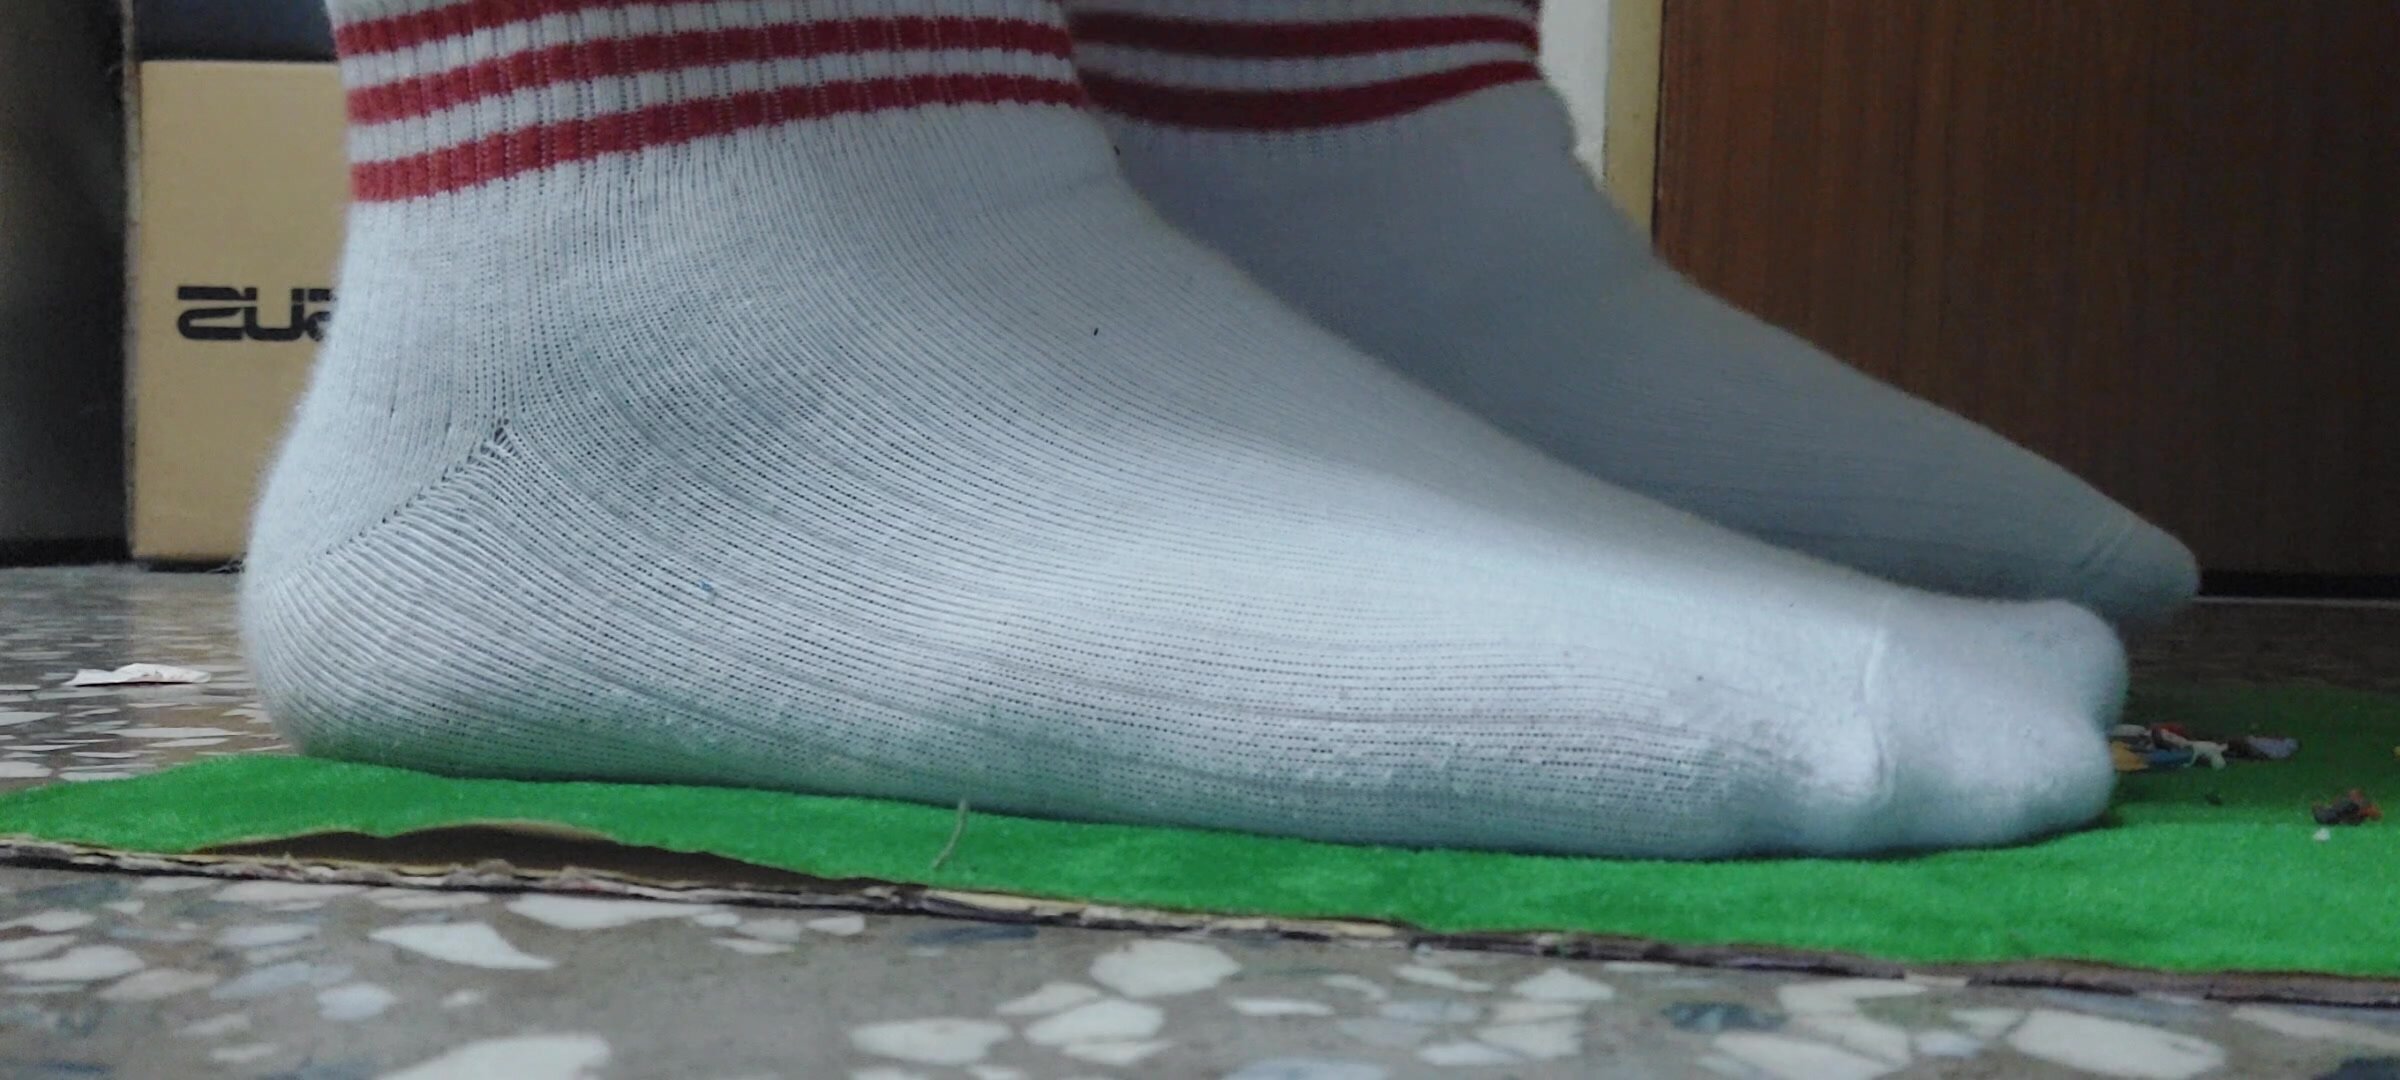 giant socks stomp tiny